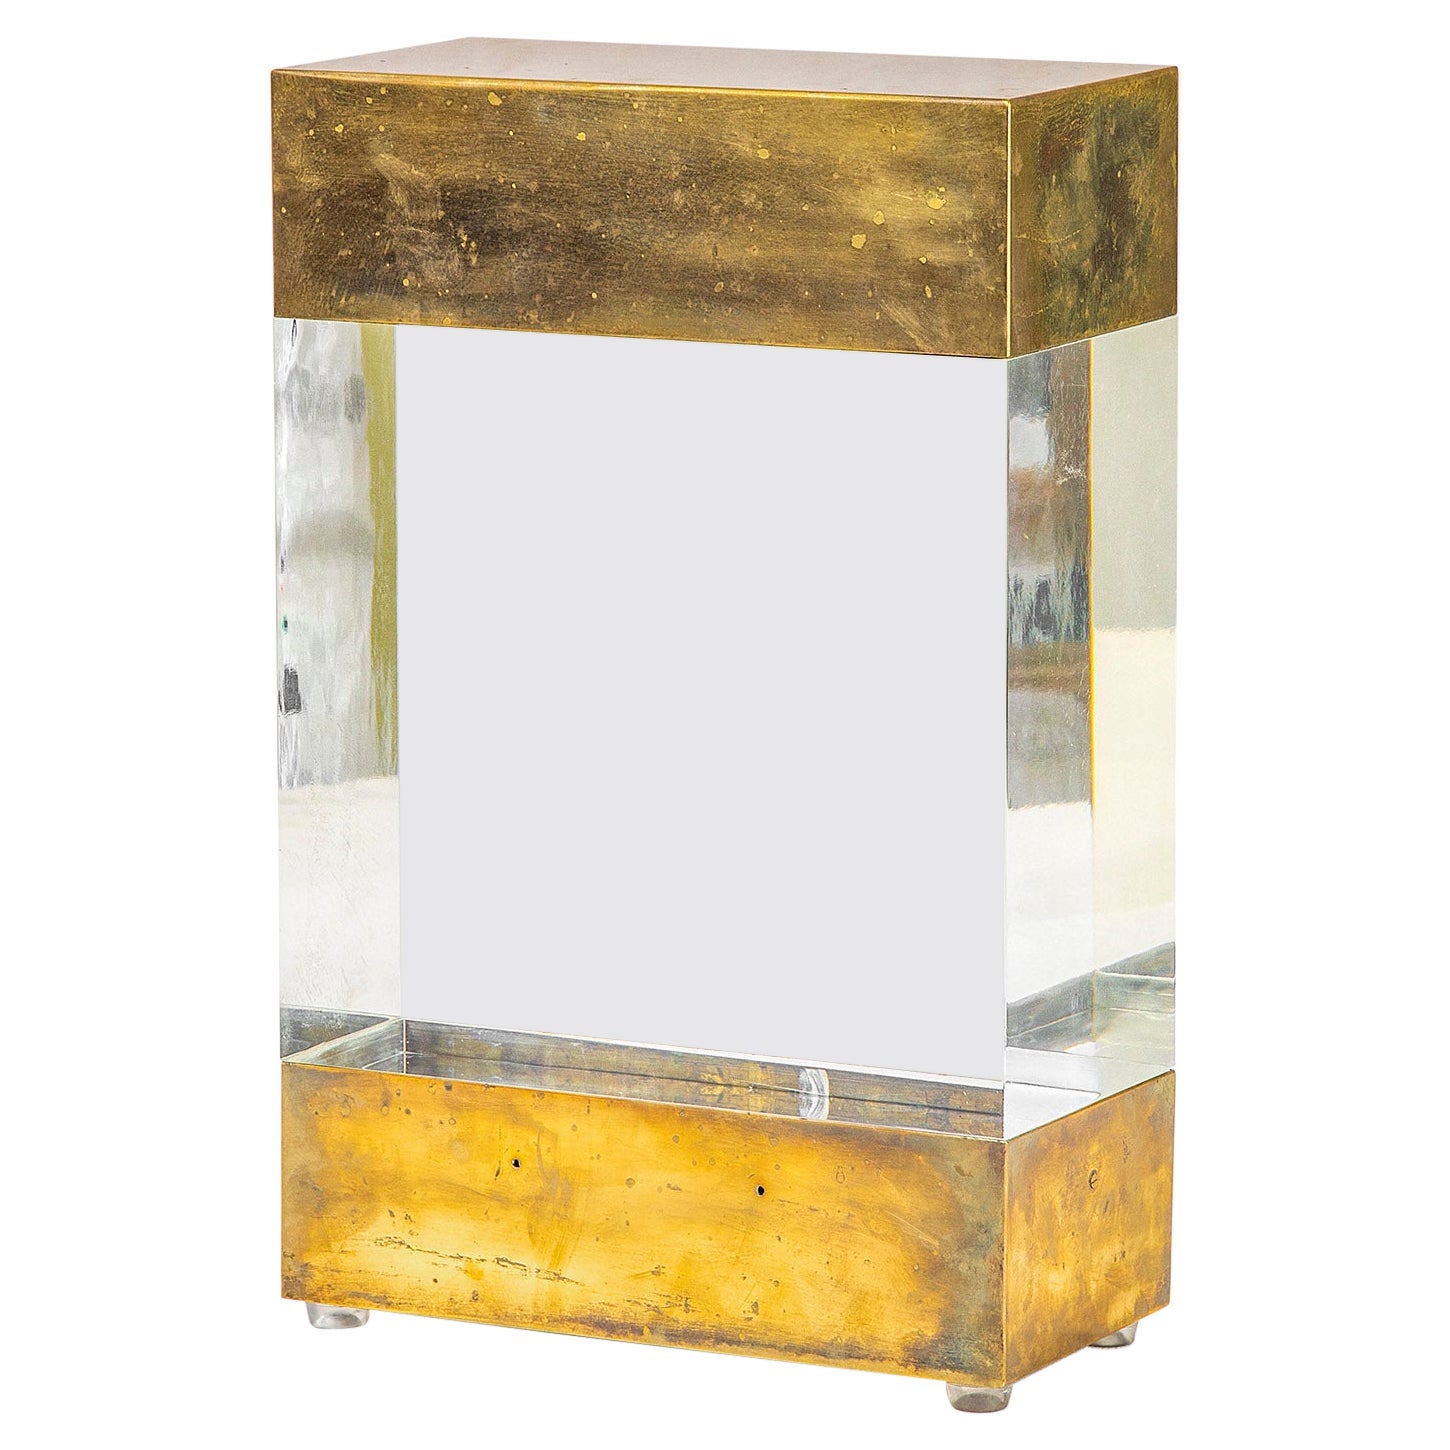 20th Century Gabriella Crespi Table Lamp in Brass and Plexiglass, '70s For Sale